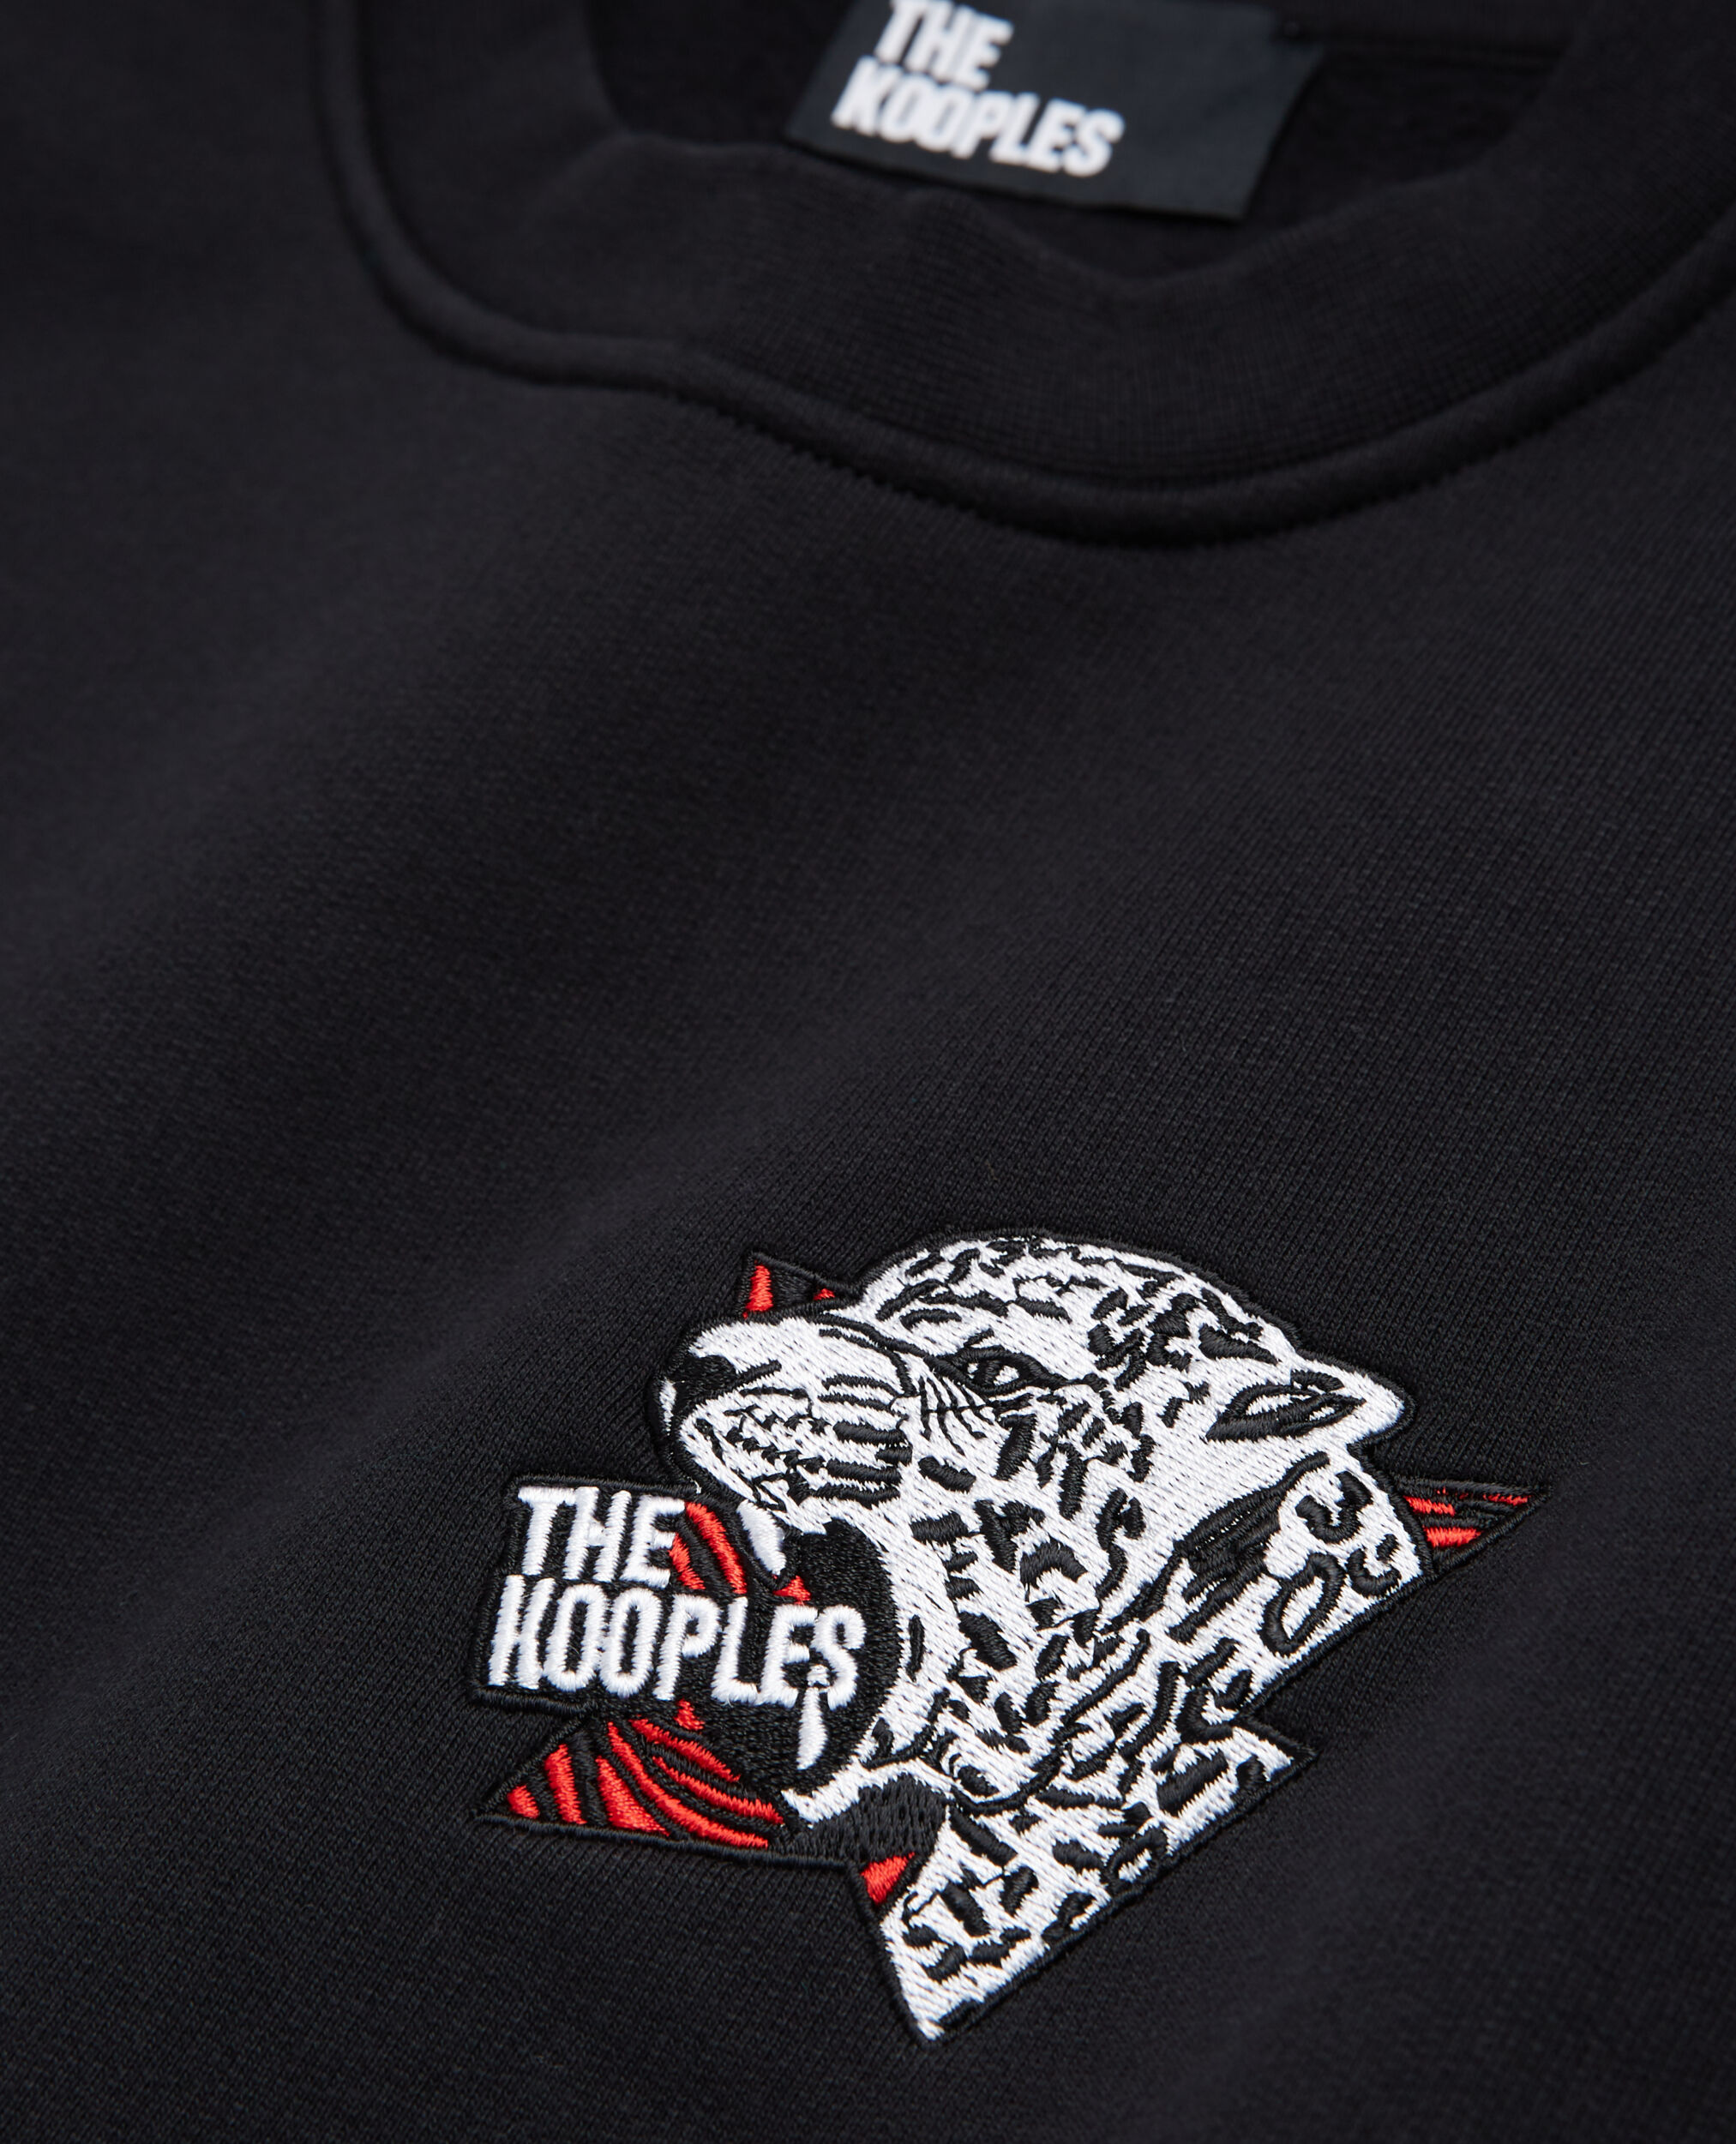 Black logo sweatshirt with a tiger print, BLACK, hi-res image number null